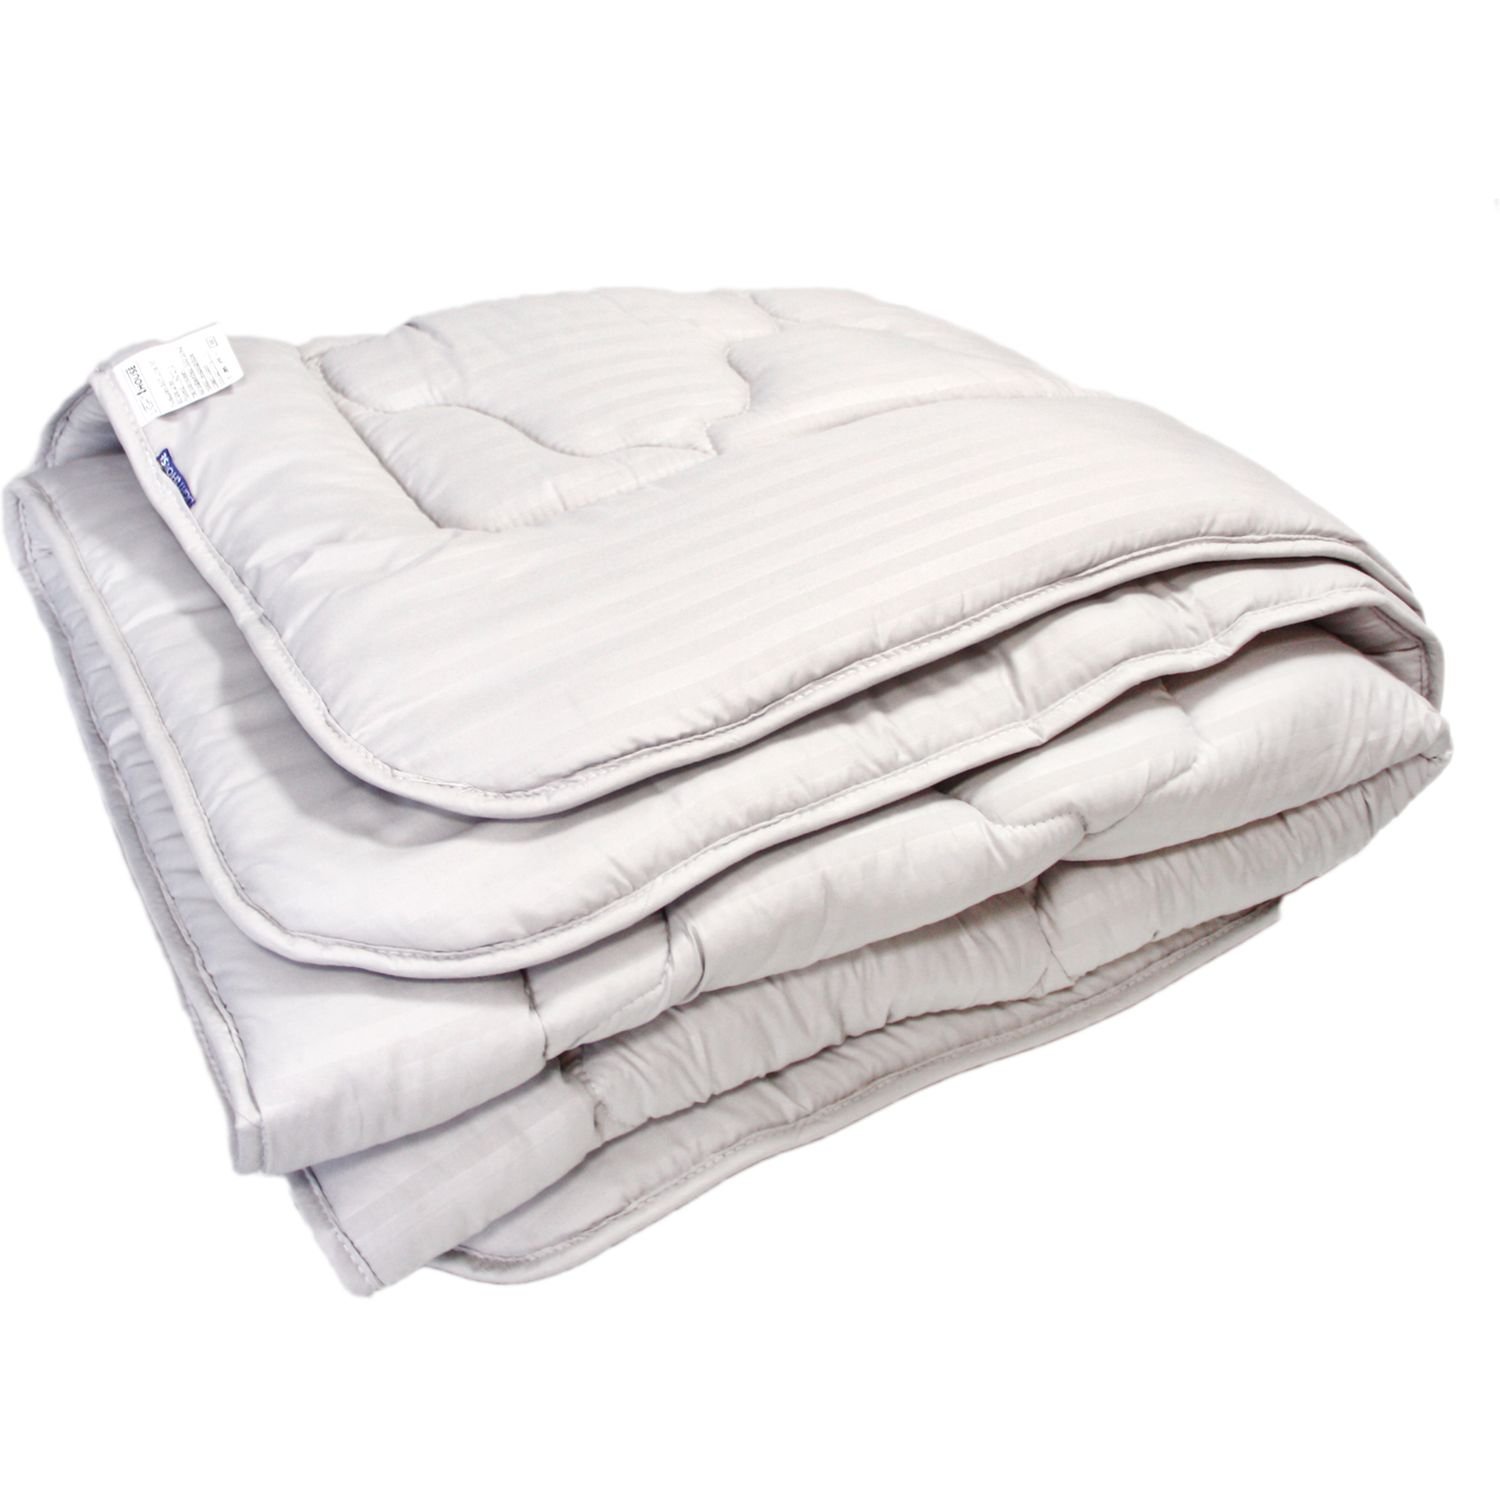 Одеяло LightHouse Soft Line Mf Stripe grey, 140х210 см, серое (602244) - фото 2